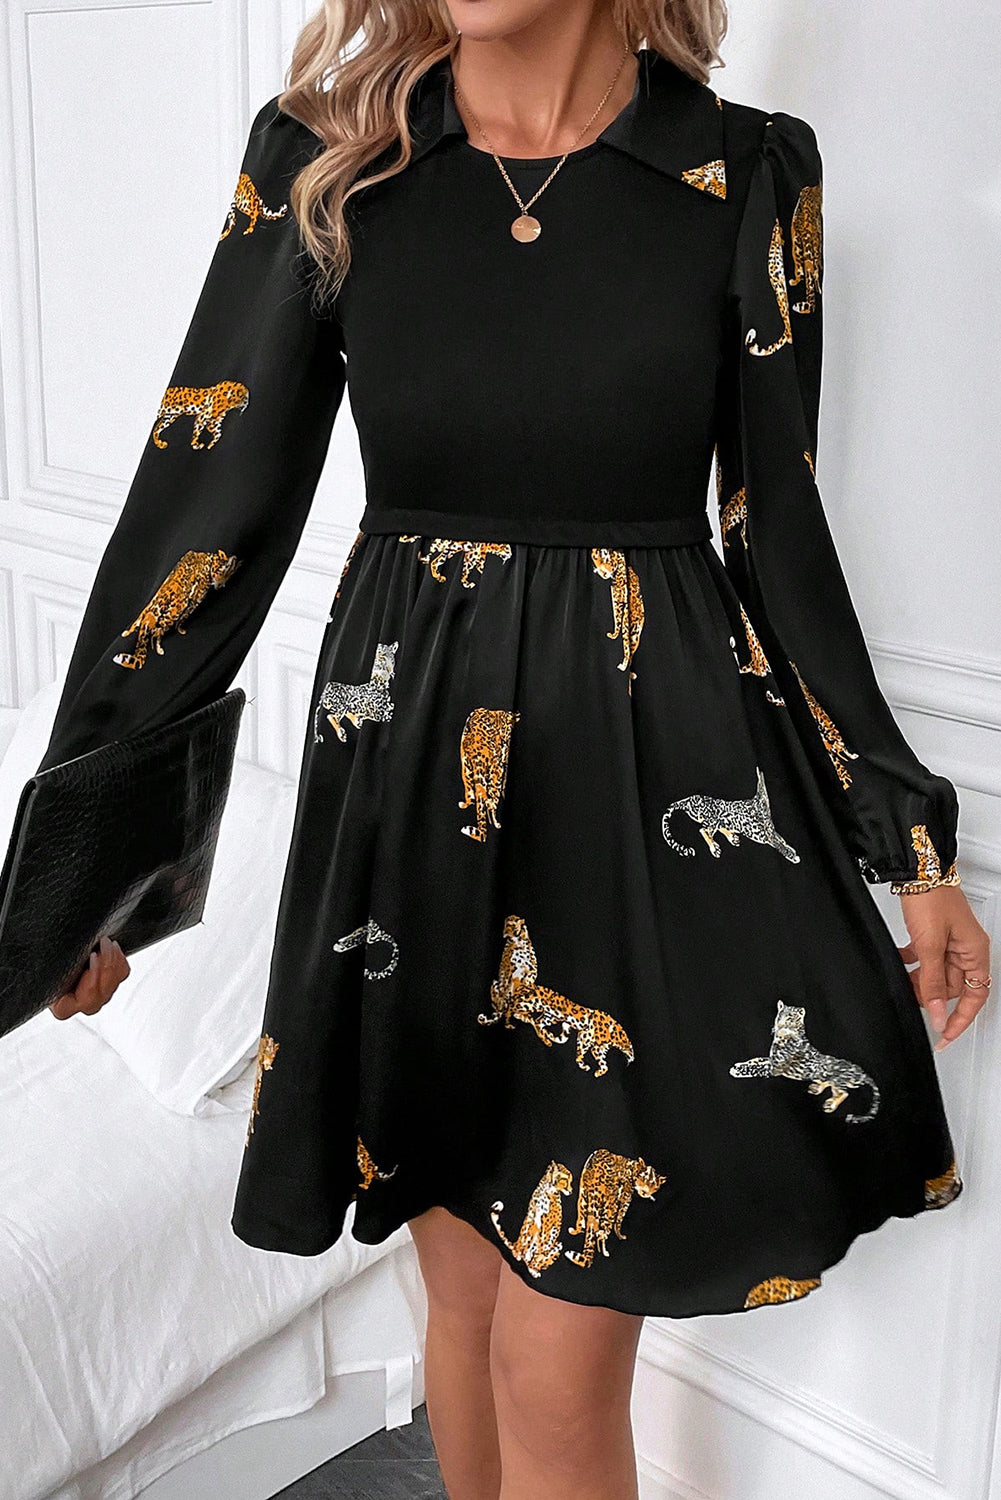 Schwarzes, langärmliges Swingkleid mit lebendigem Leopardenmuster